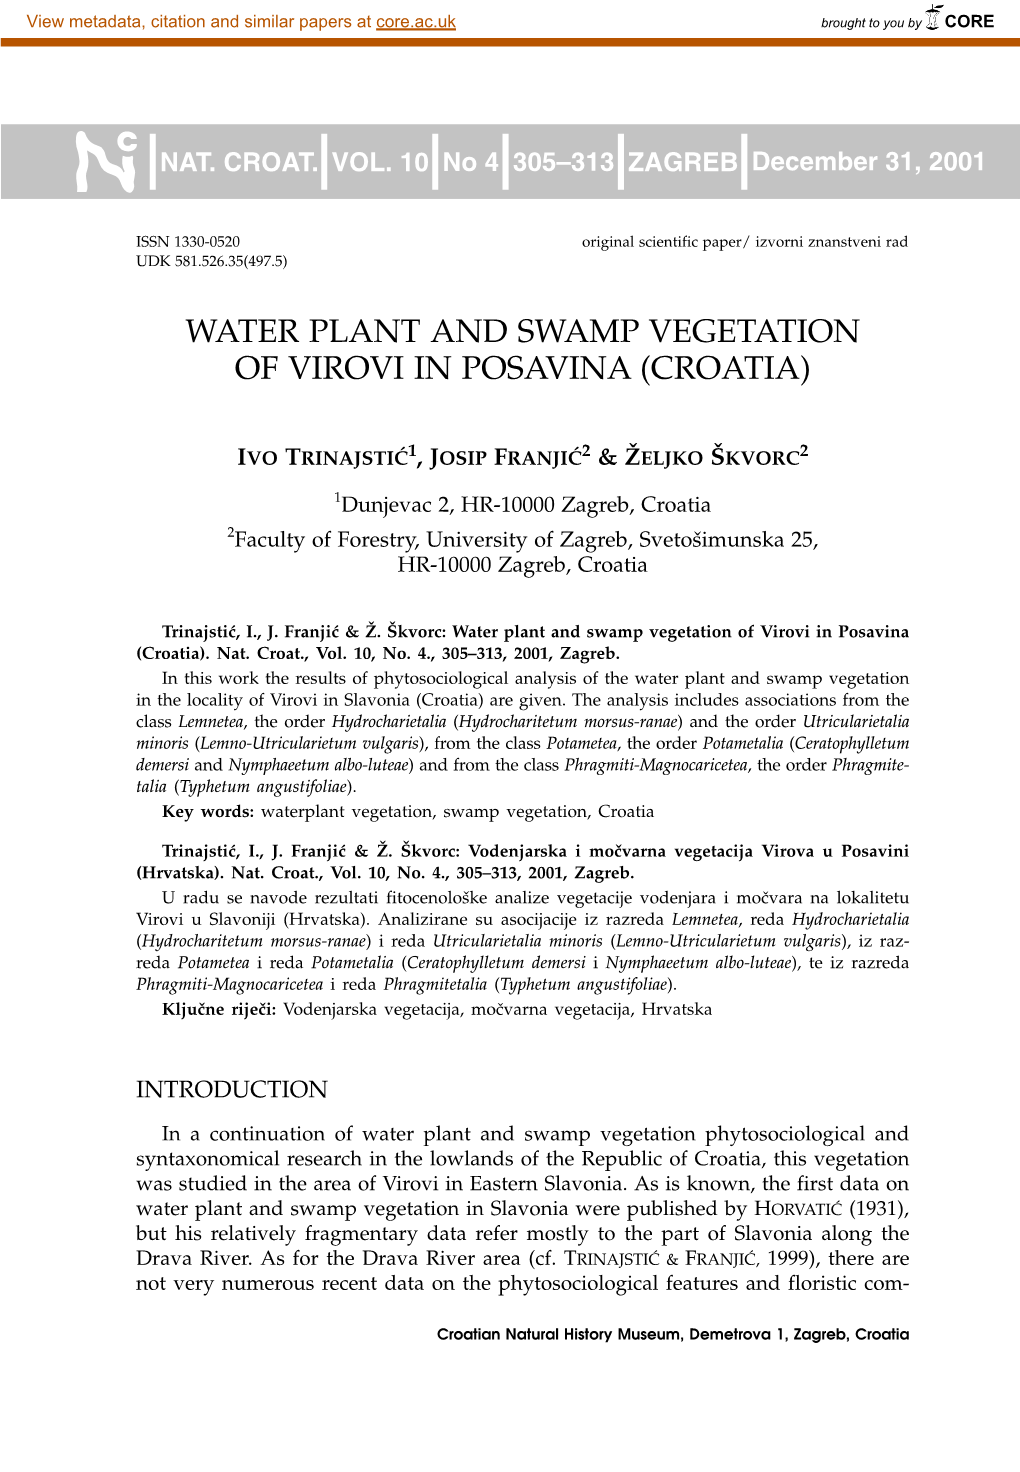 Water Plant and Swamp Vegetation of Virovi in Posavina (Croatia)